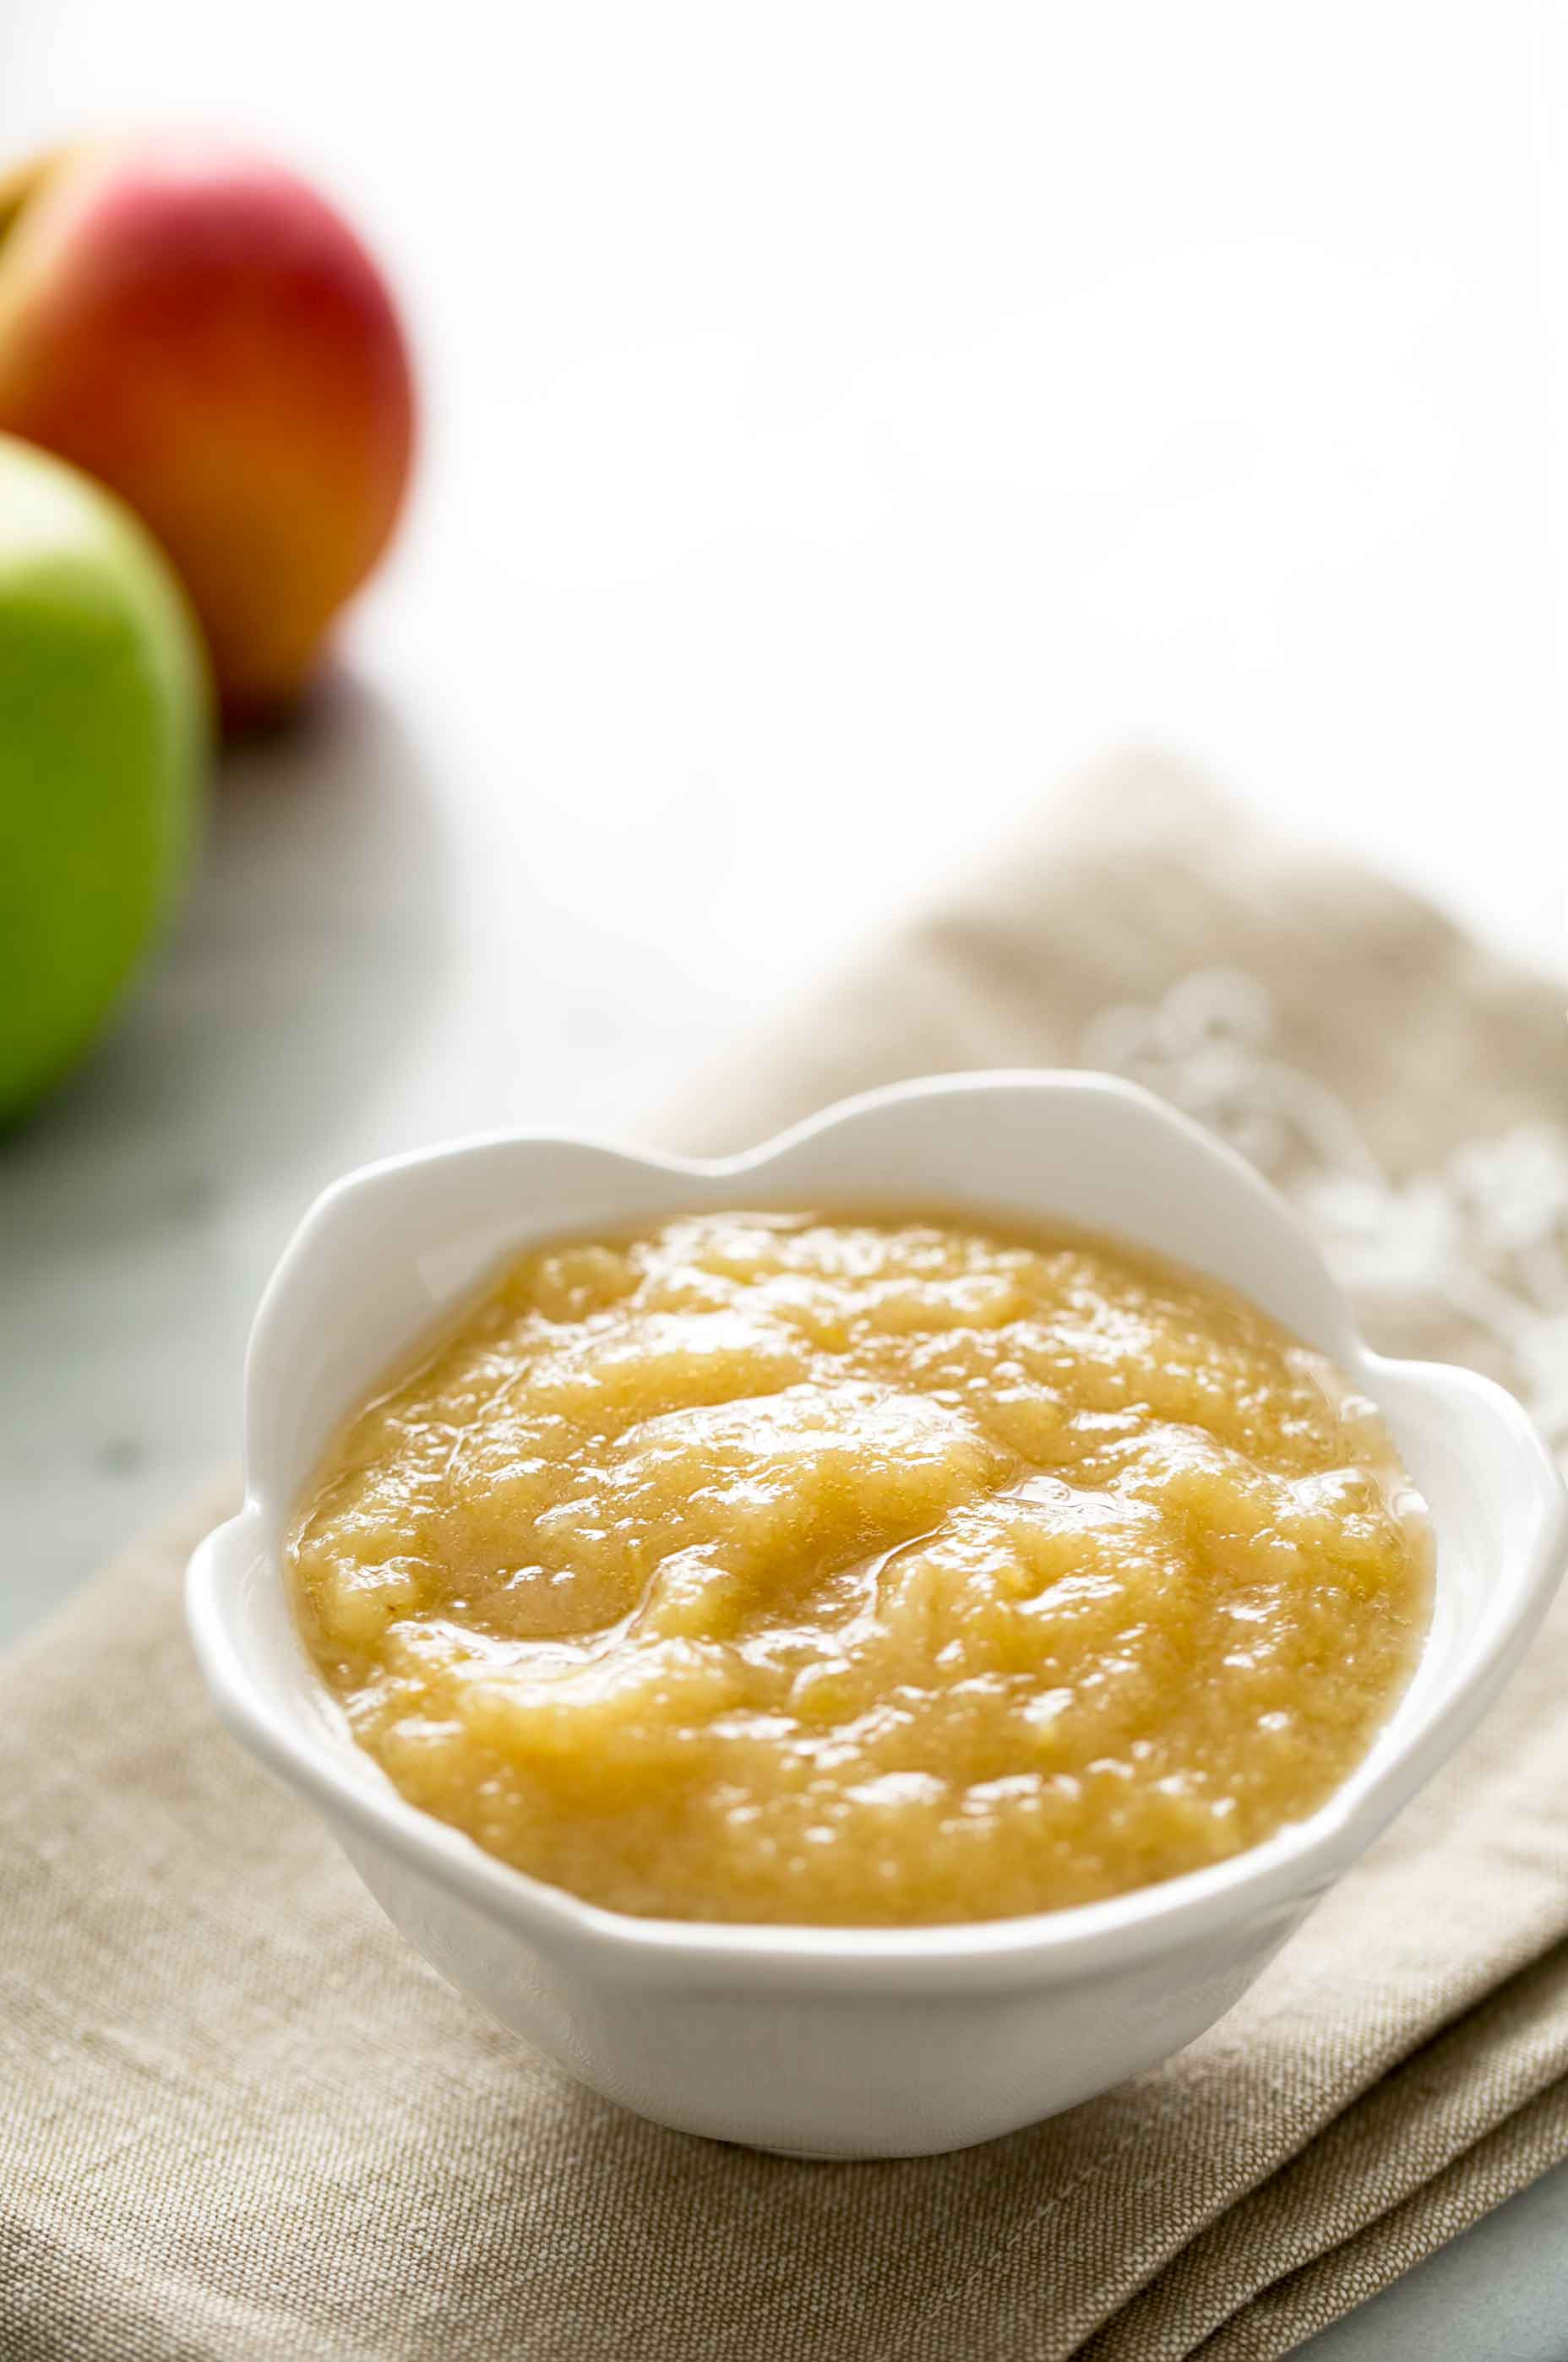 Recipes Using Applesauce
 Homemade Applesauce